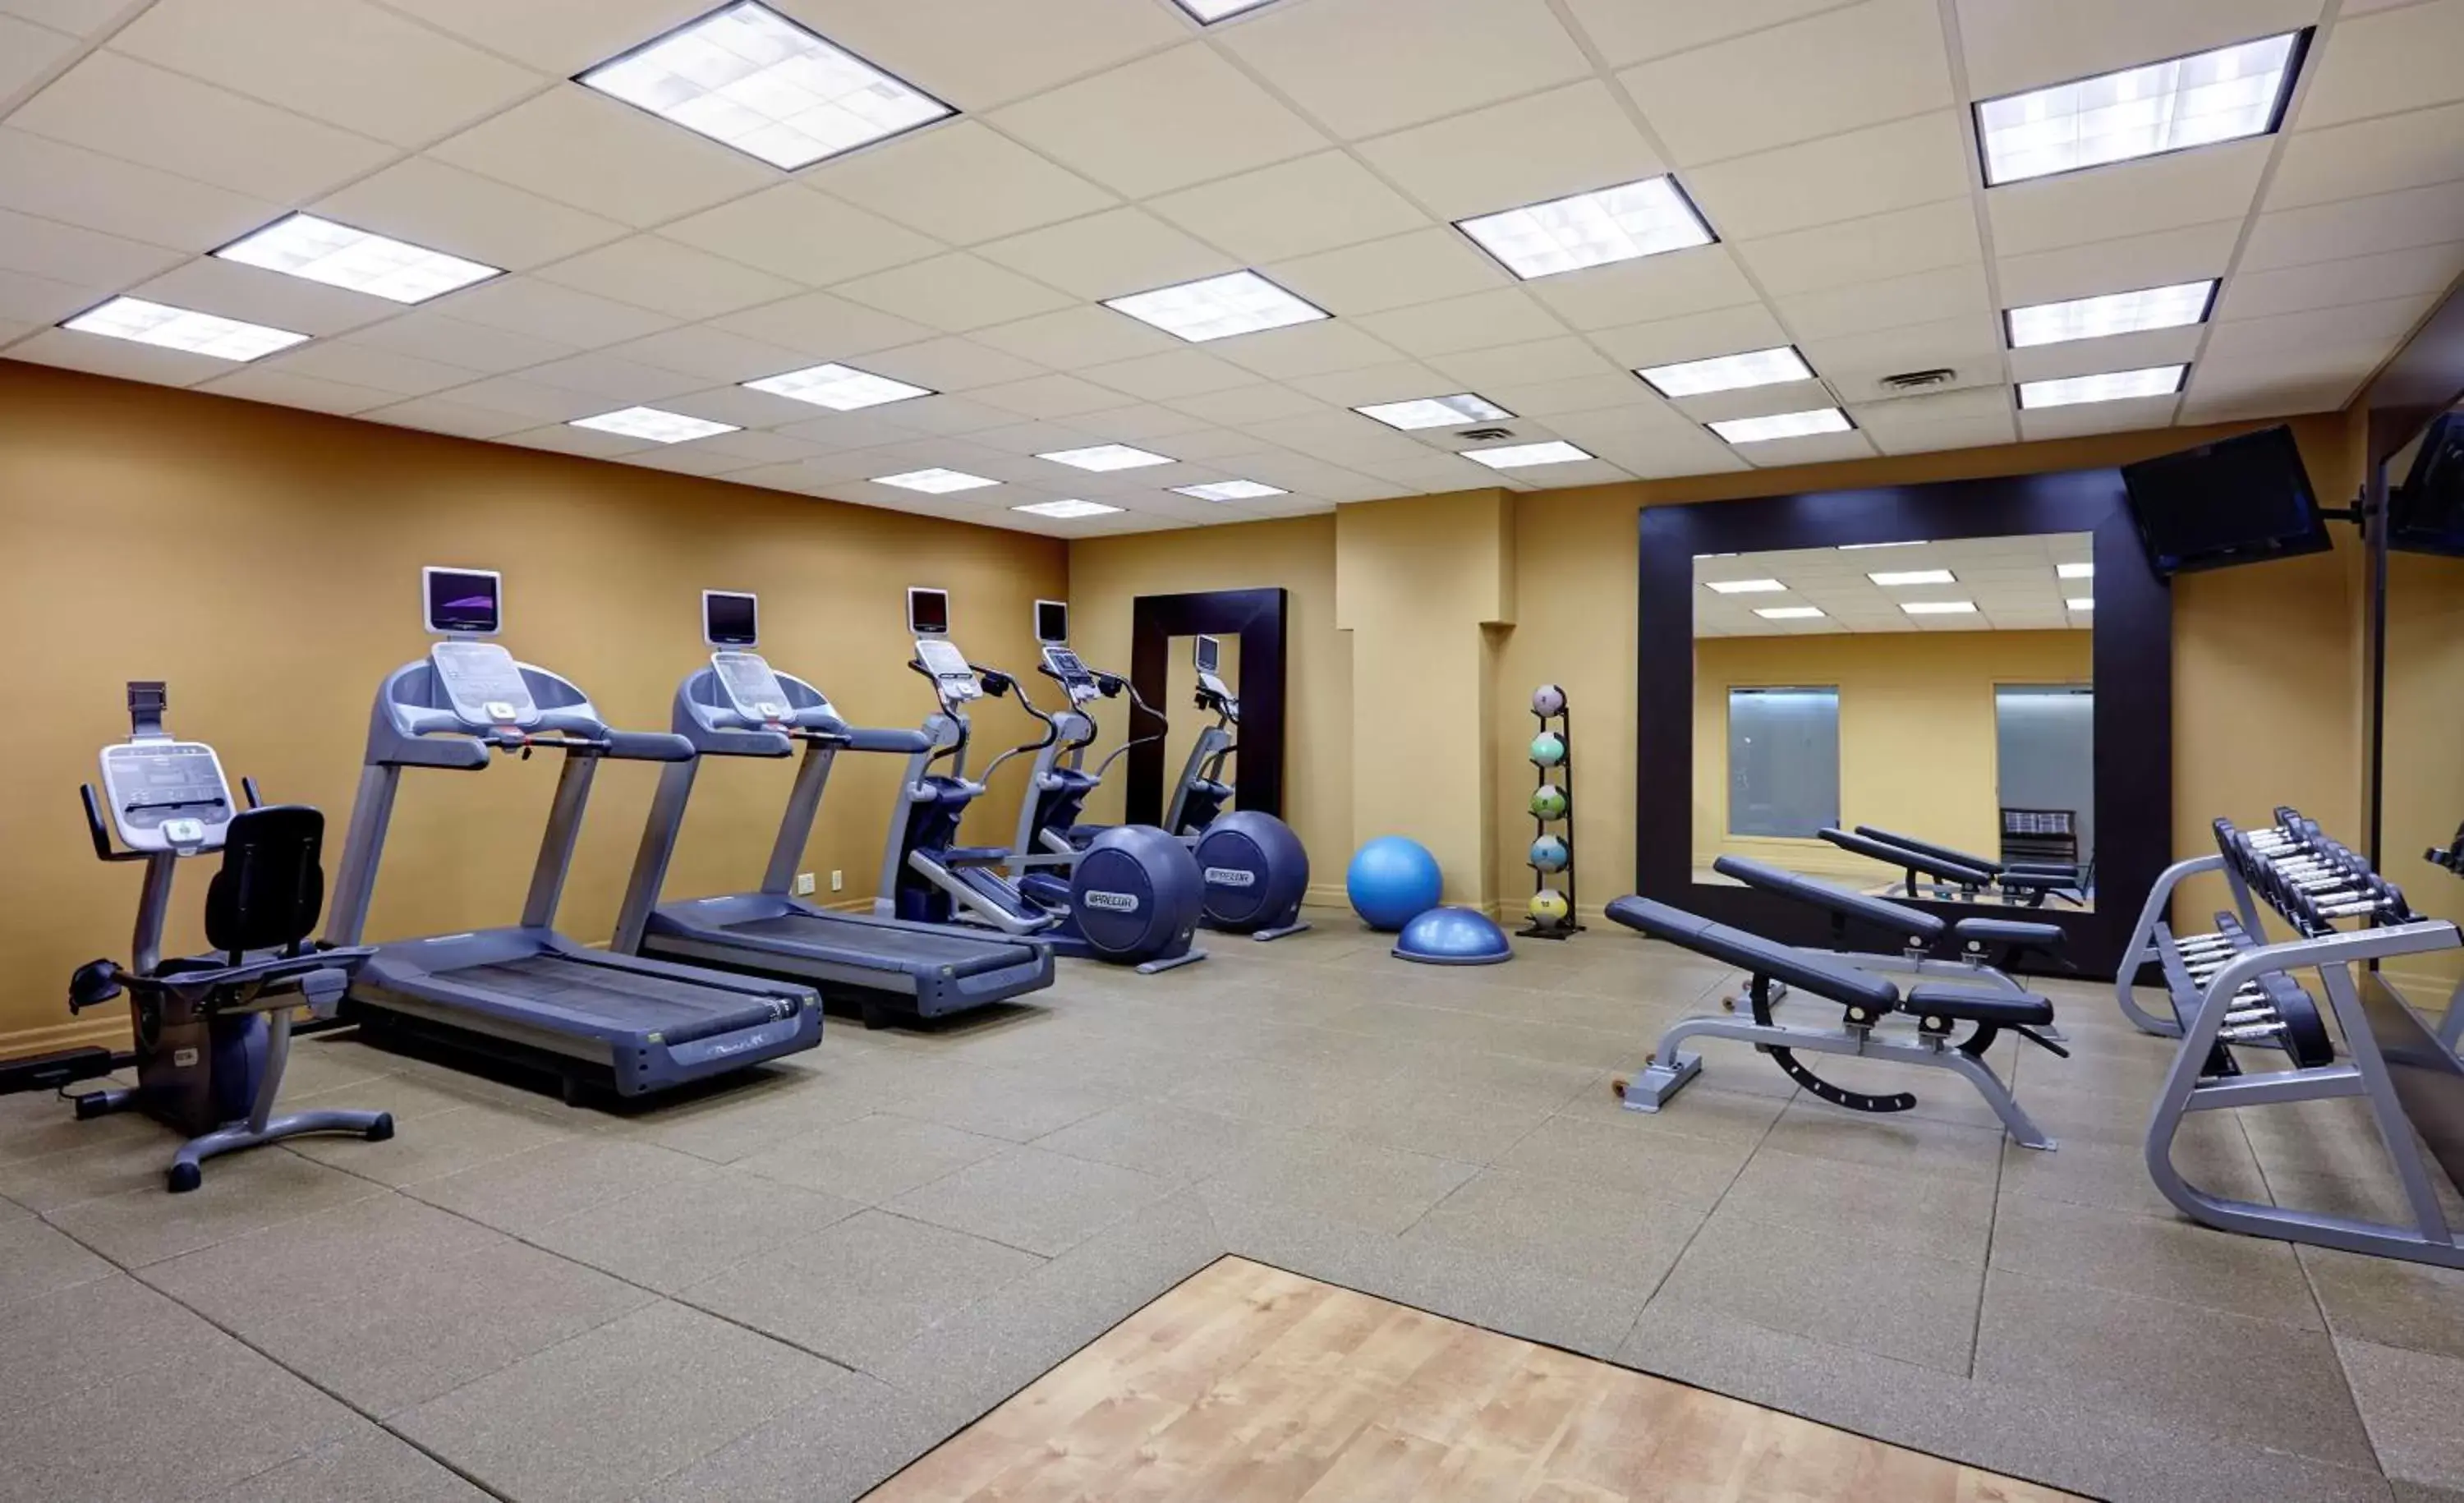 Fitness centre/facilities, Fitness Center/Facilities in Hilton Saint John